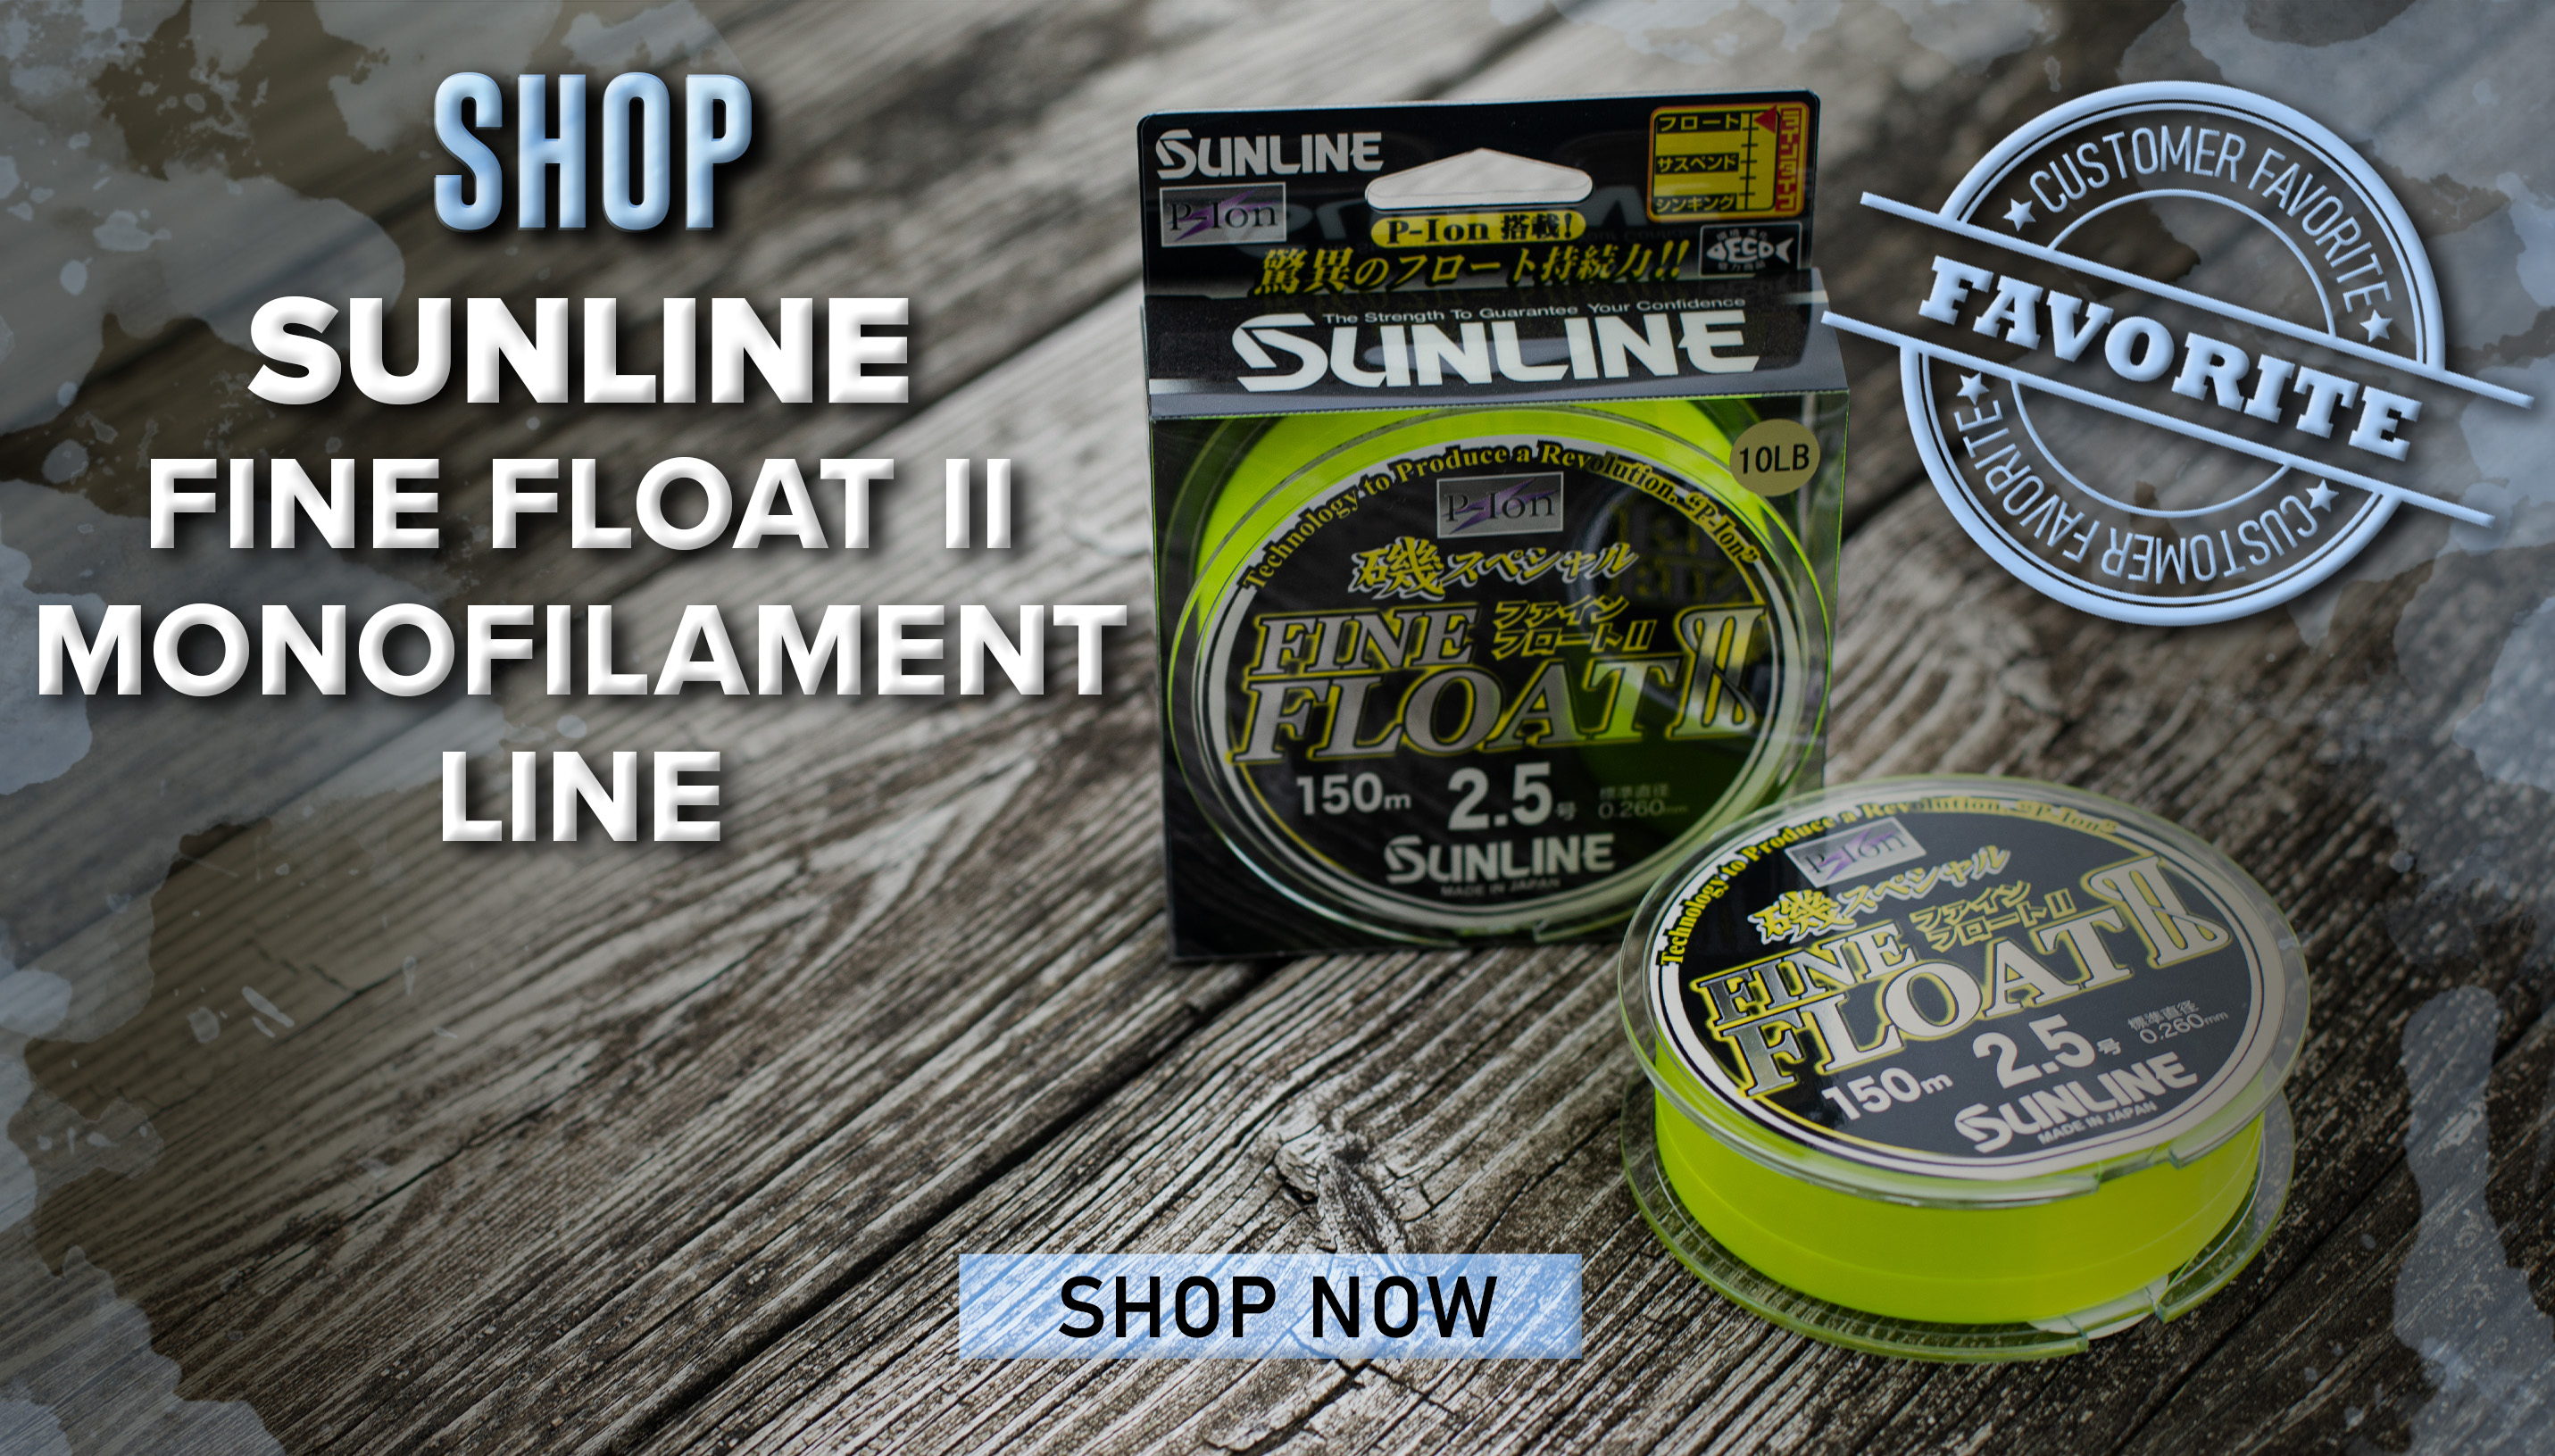 Customer Favorite Sunline Fine FLoat II Monofilament Line Shop Now